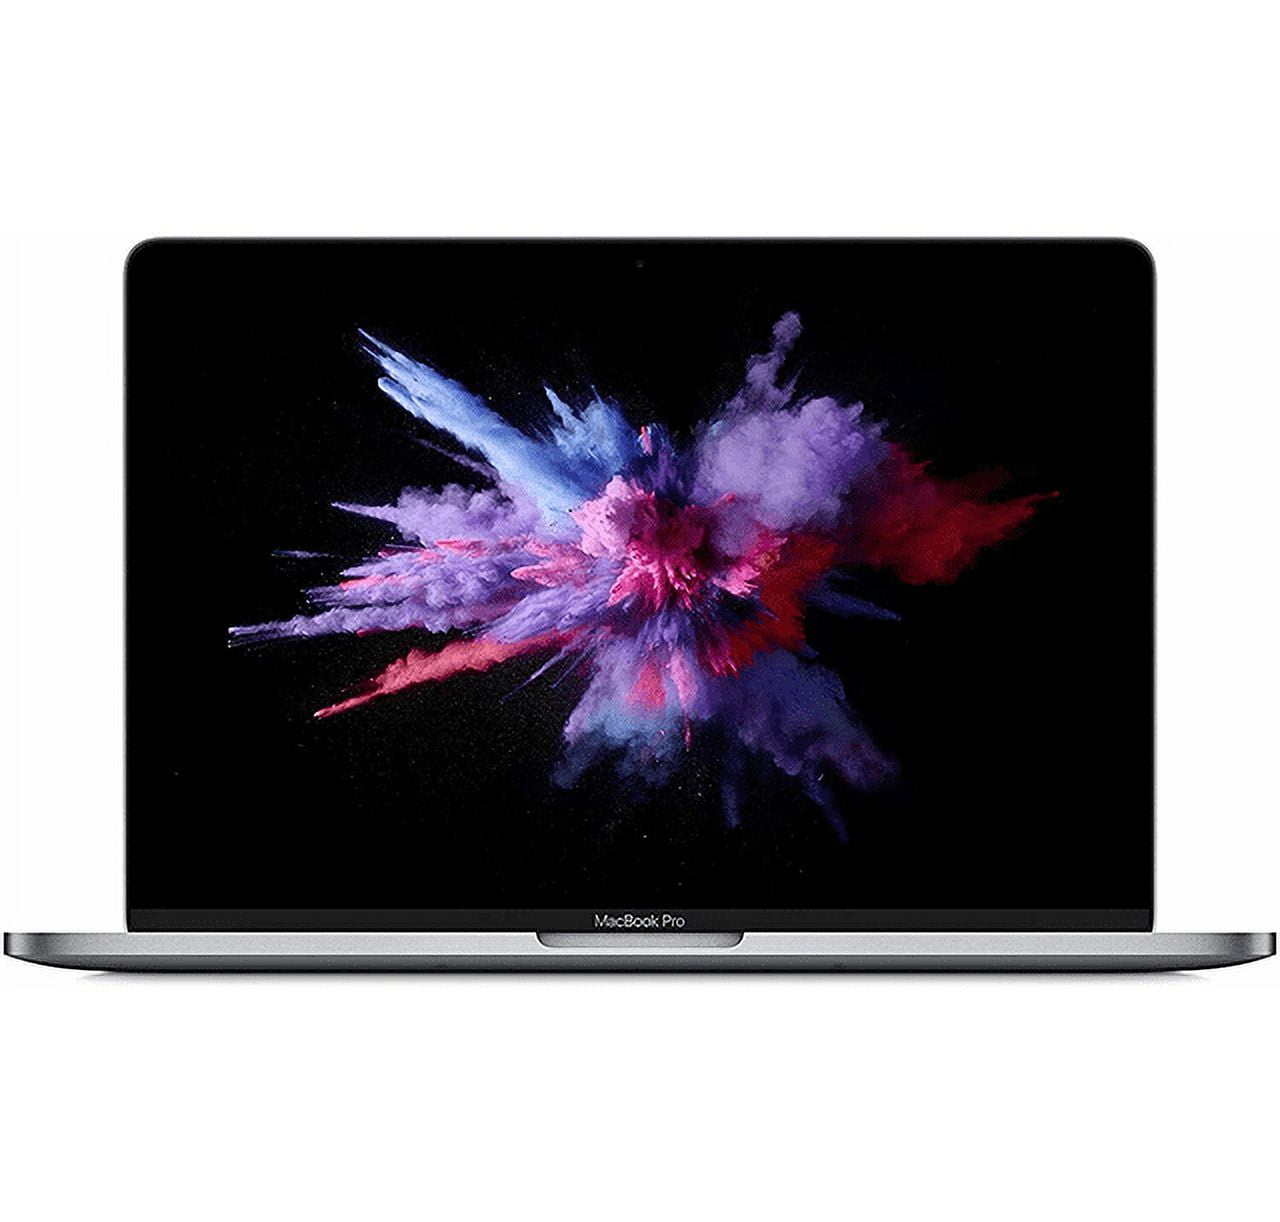 Pre-Owned Apple MacBook Pro 2019 MUHQ2LL/A Silver 13‚Äù Touch Bar 128GB SSD  8GB RAM 1.4GHz Laptop (Fair) - Walmart.com